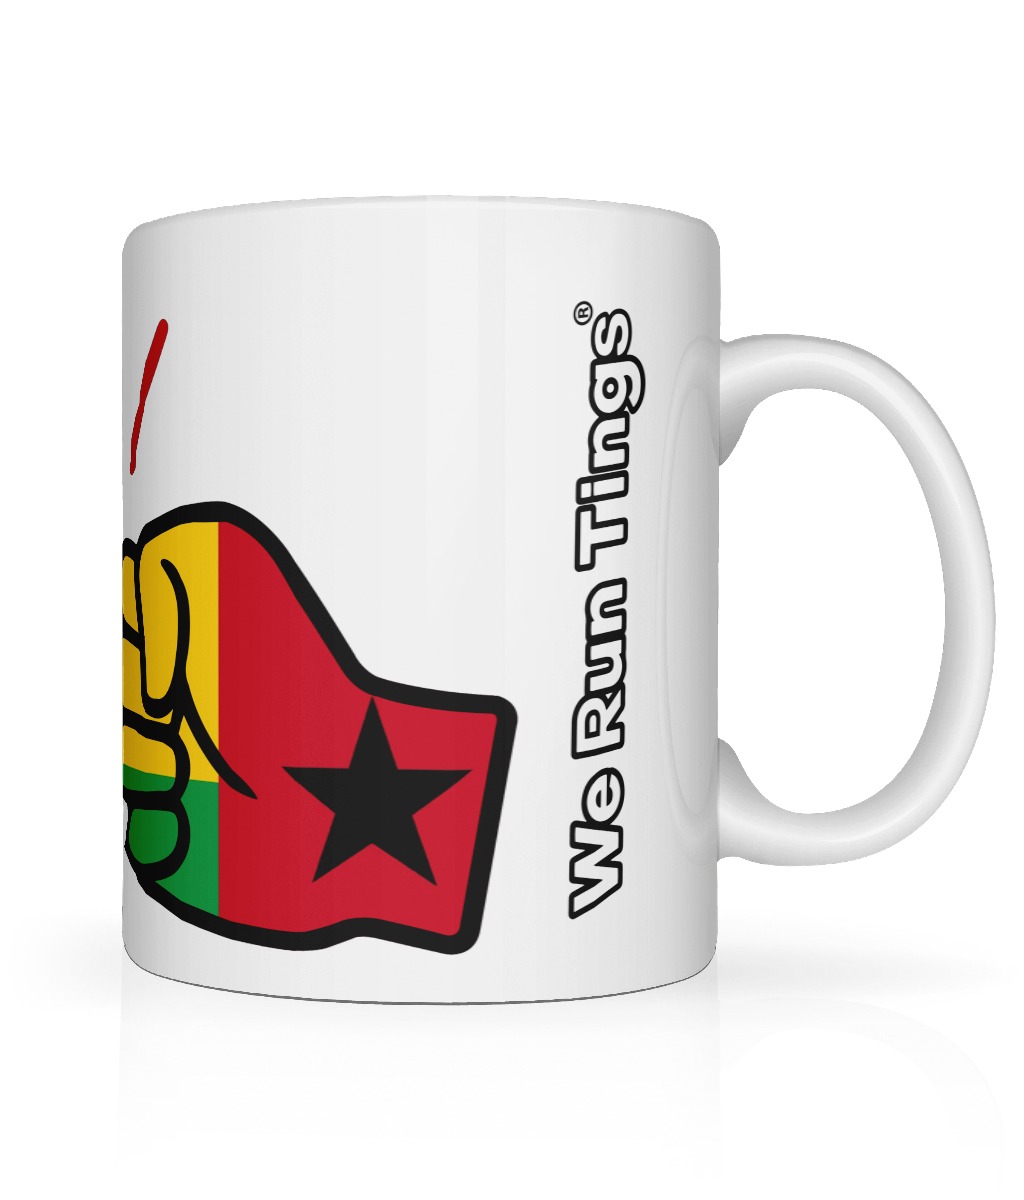 We Run Tings, Guinea-Bissau, Tea, Coffee Ceramic Mug, Cup, White, 11oz